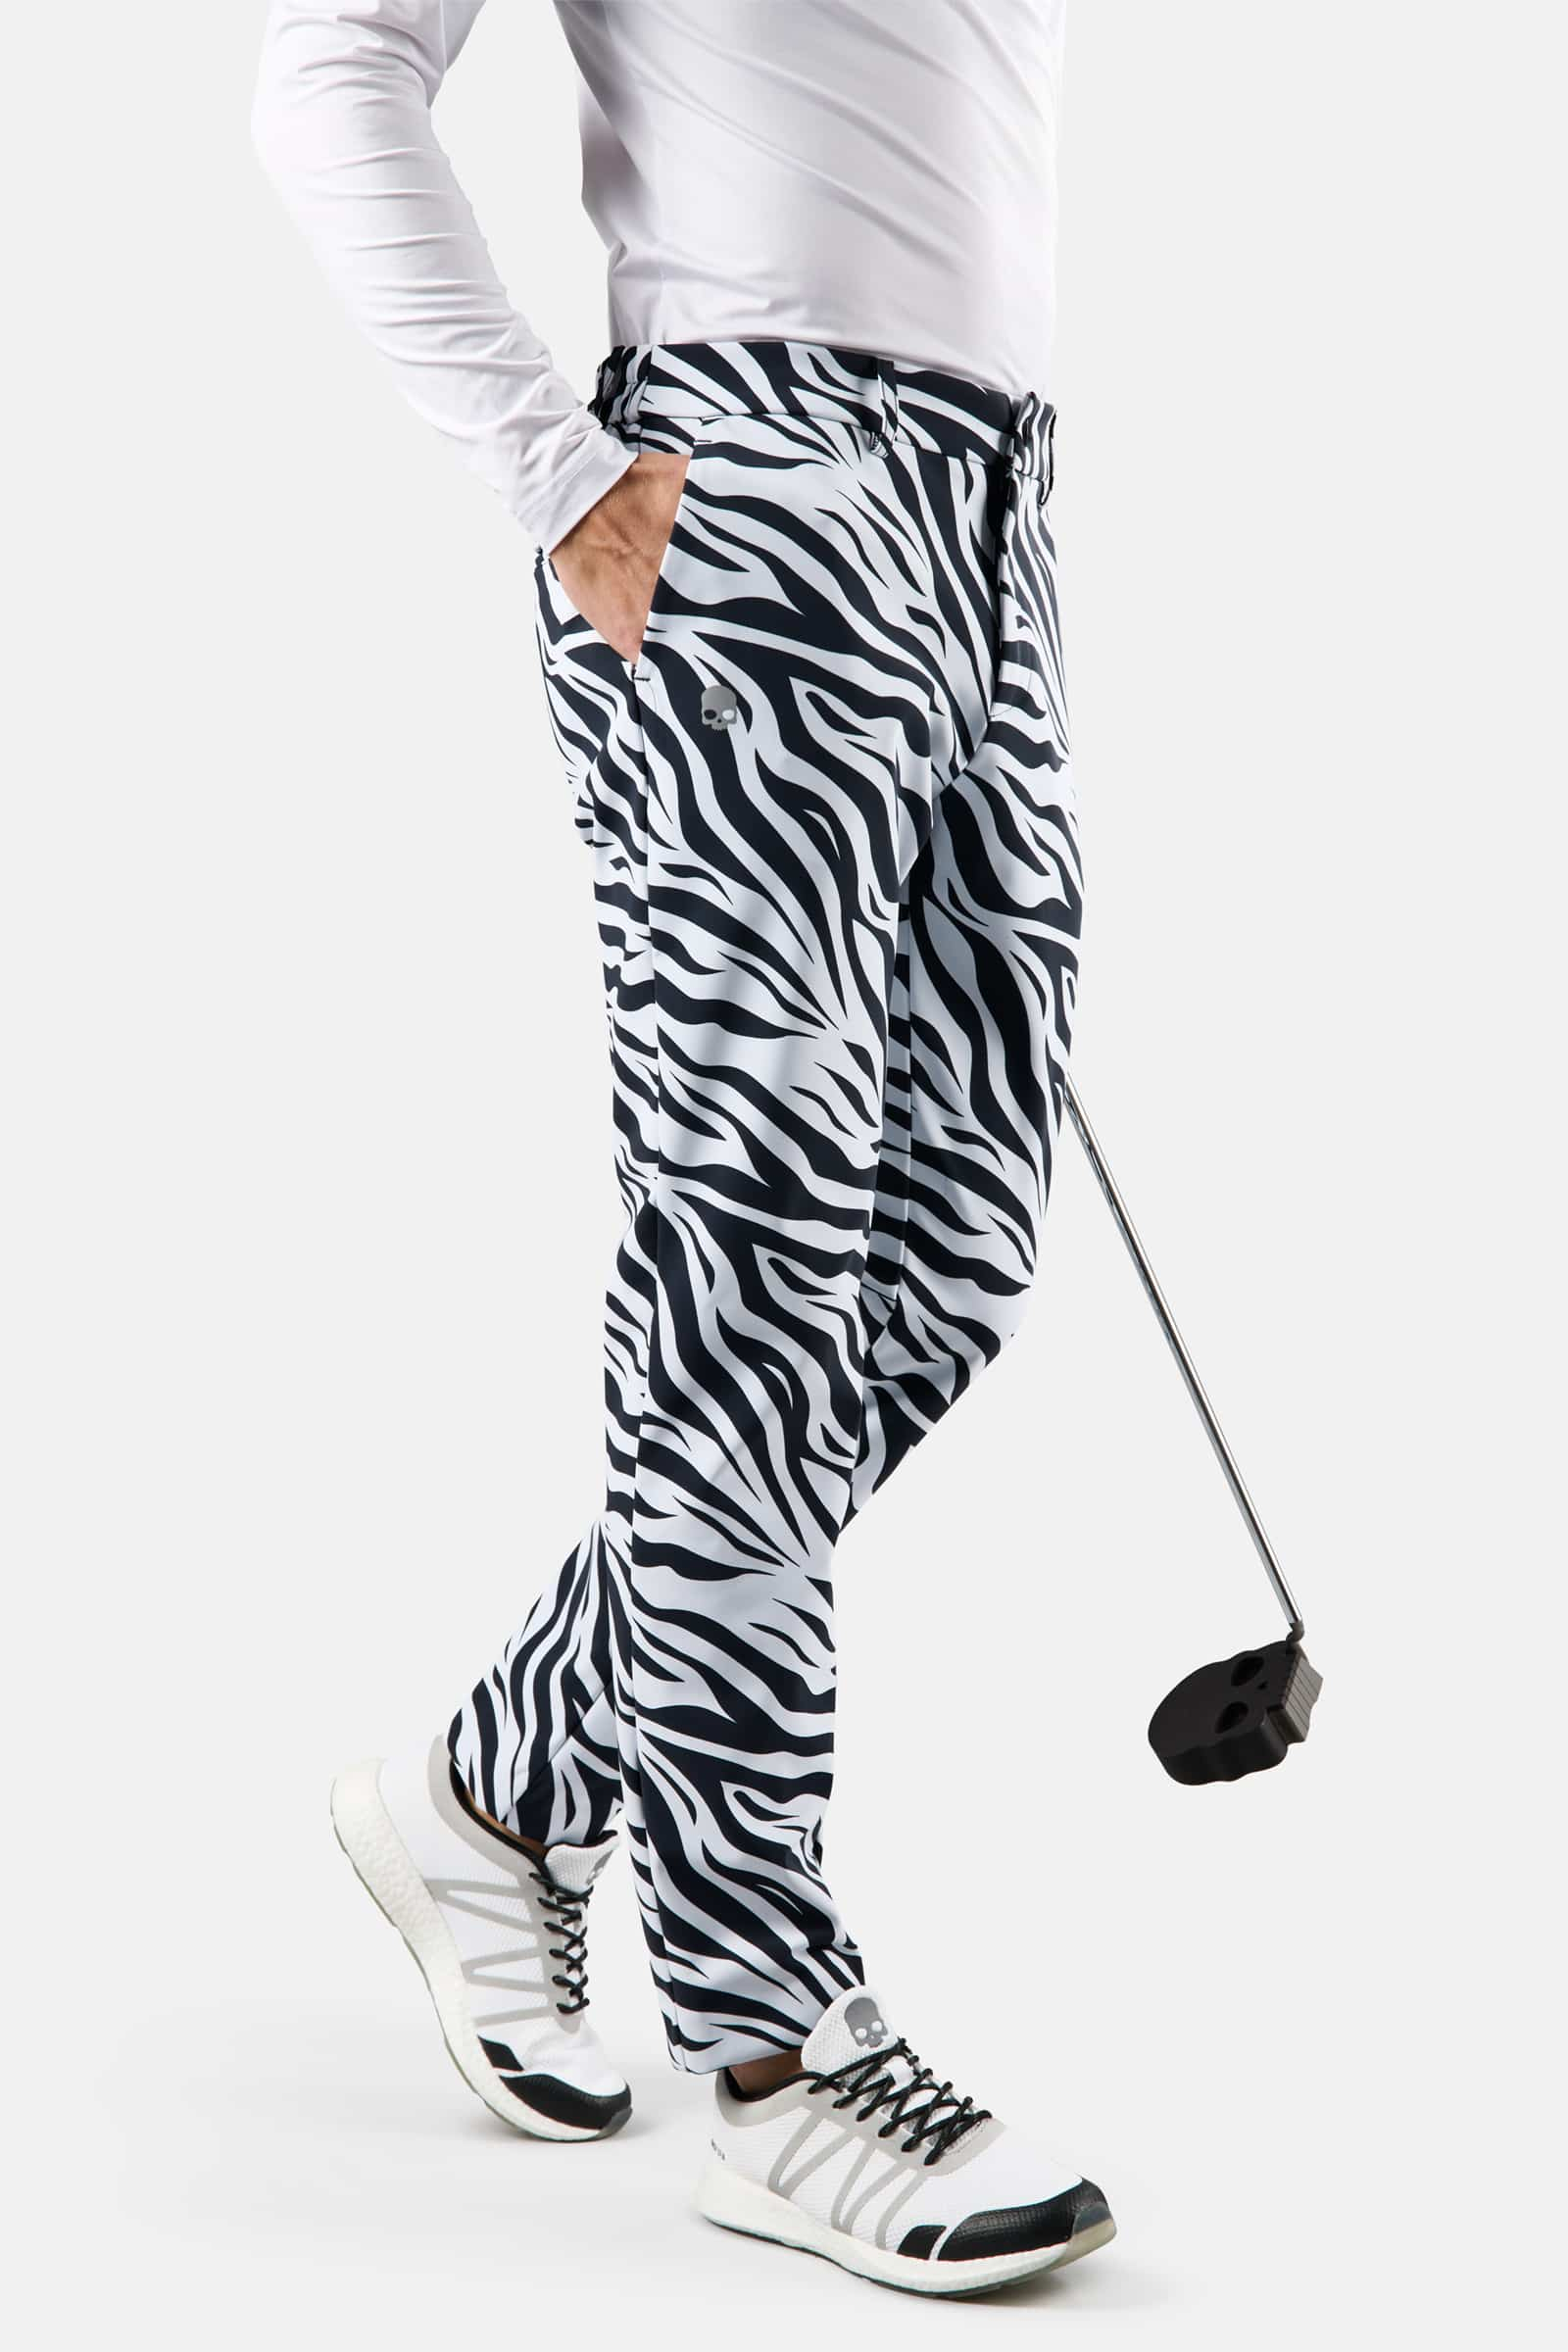 Pantaloni invernali da golf - ZEBRA - Abbigliamento sportivo | Hydrogen